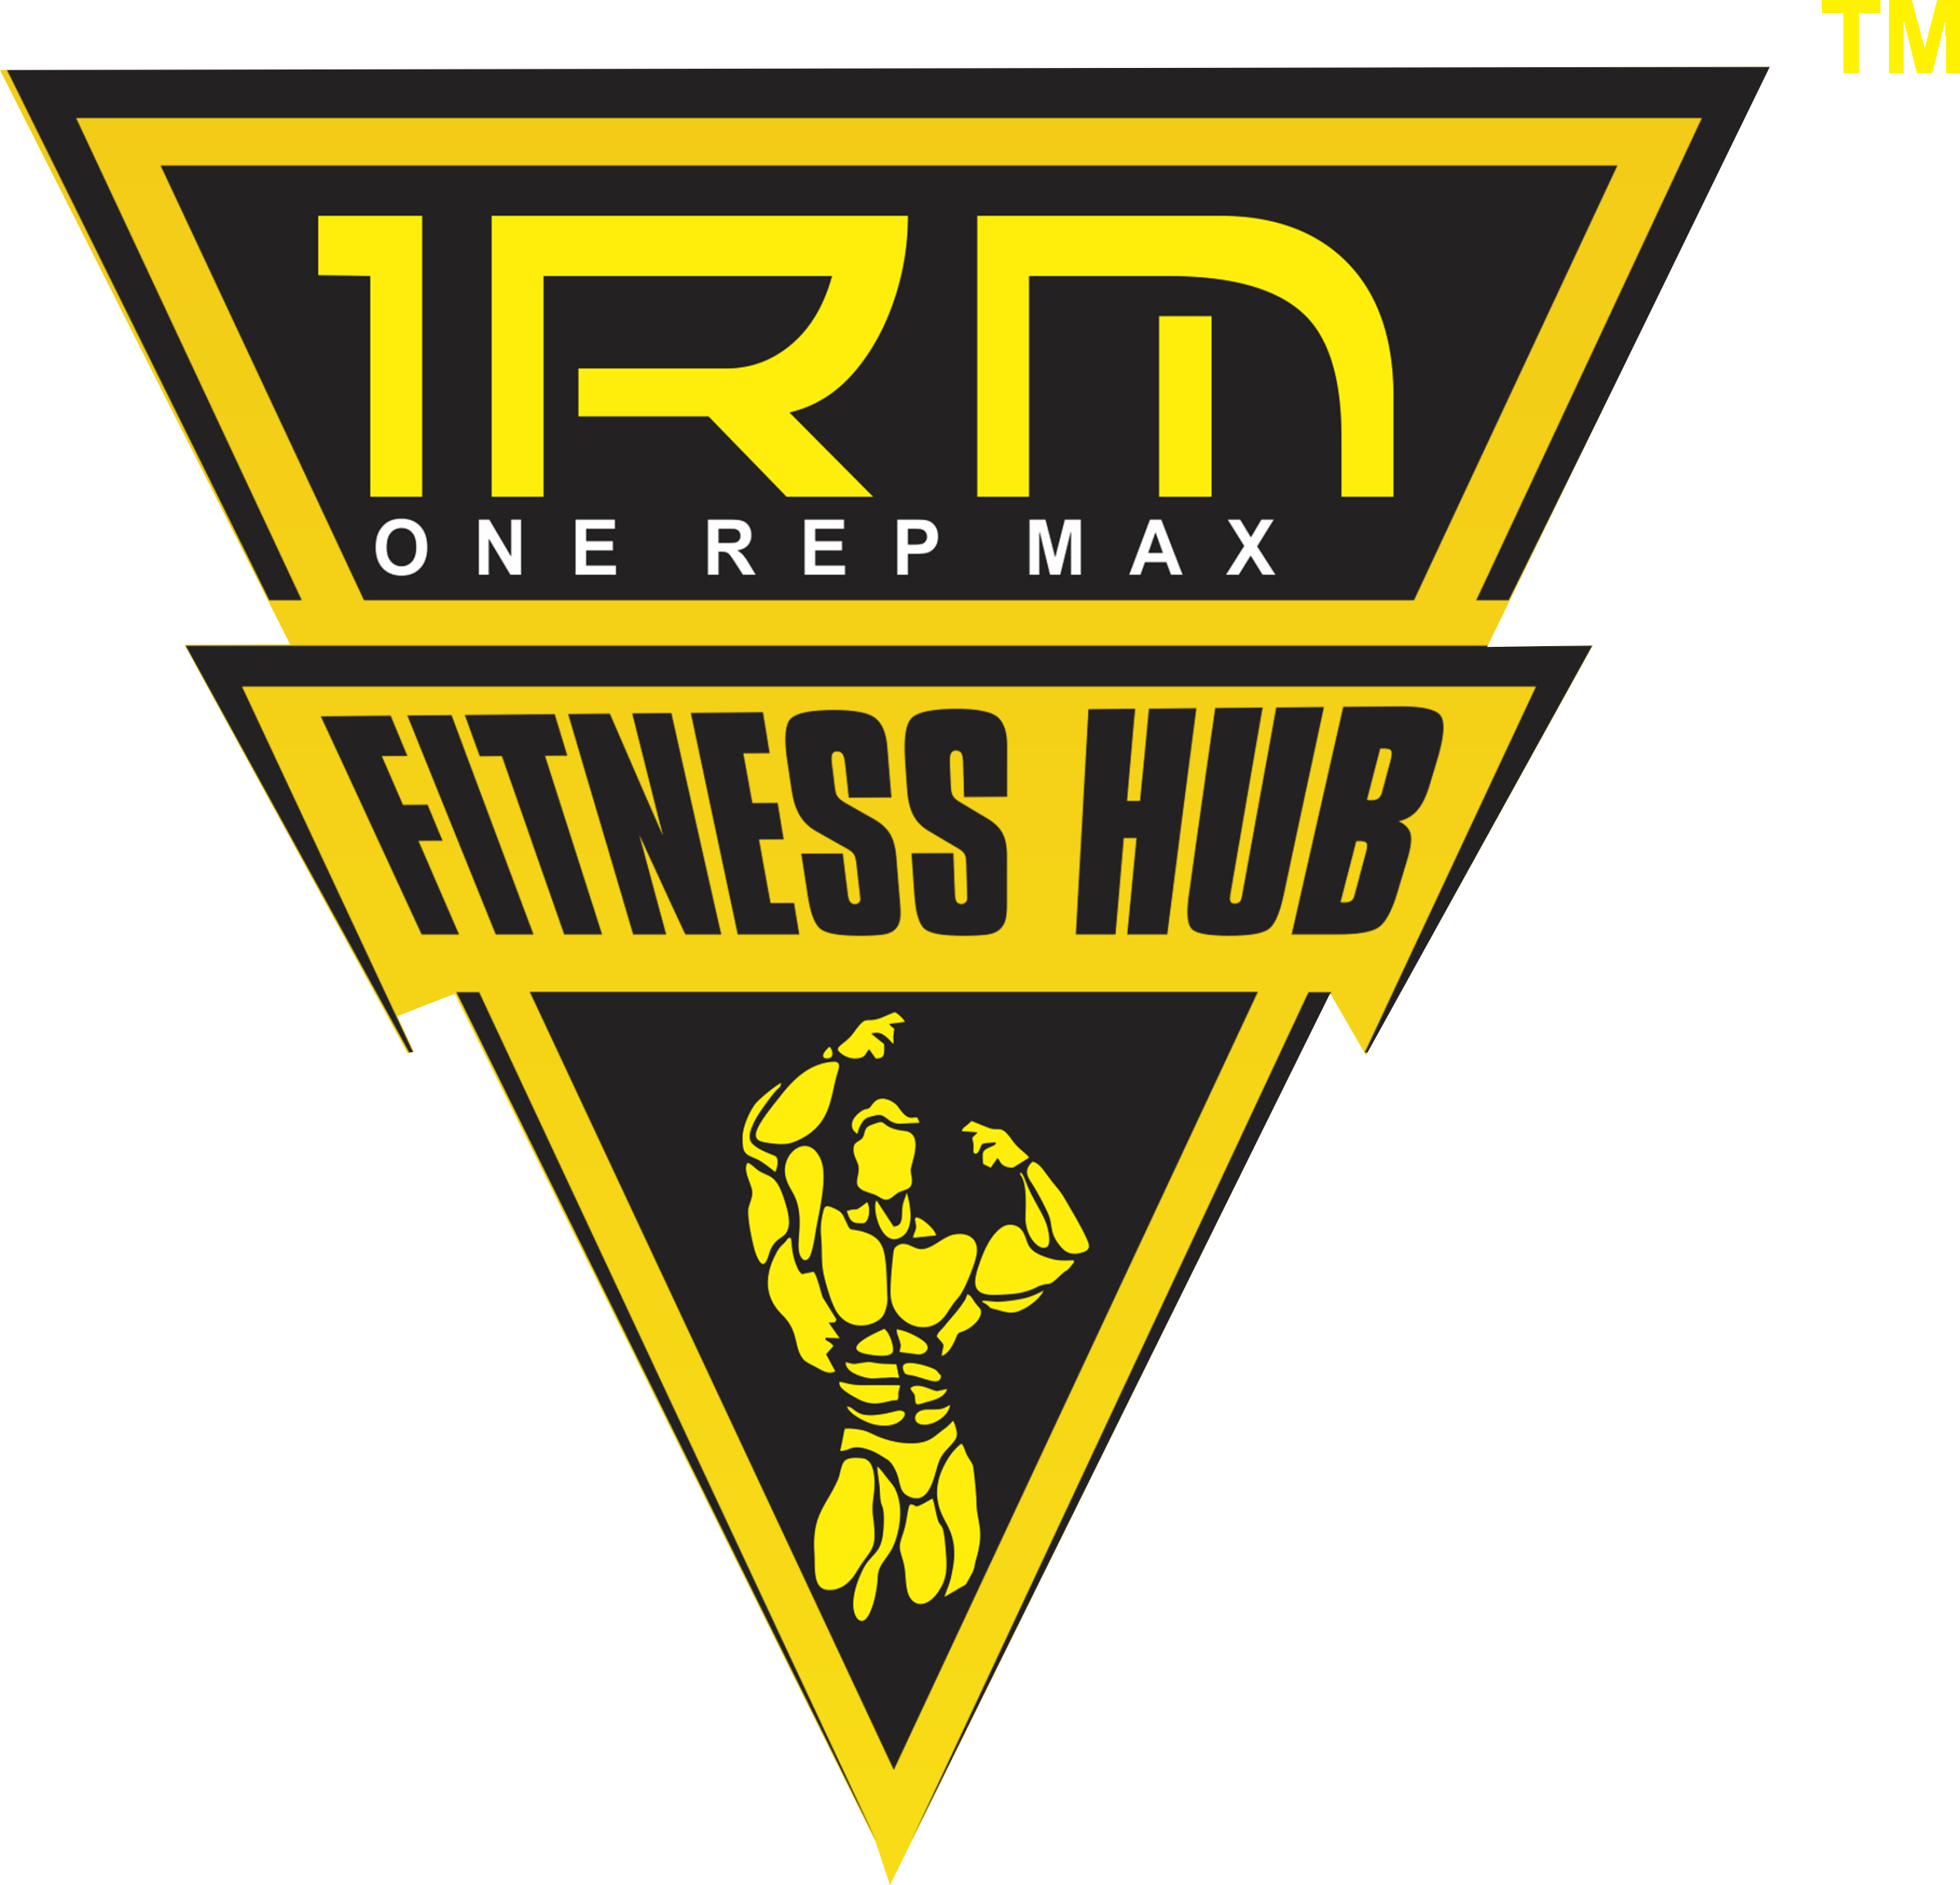 One rep max fitness hub Logo